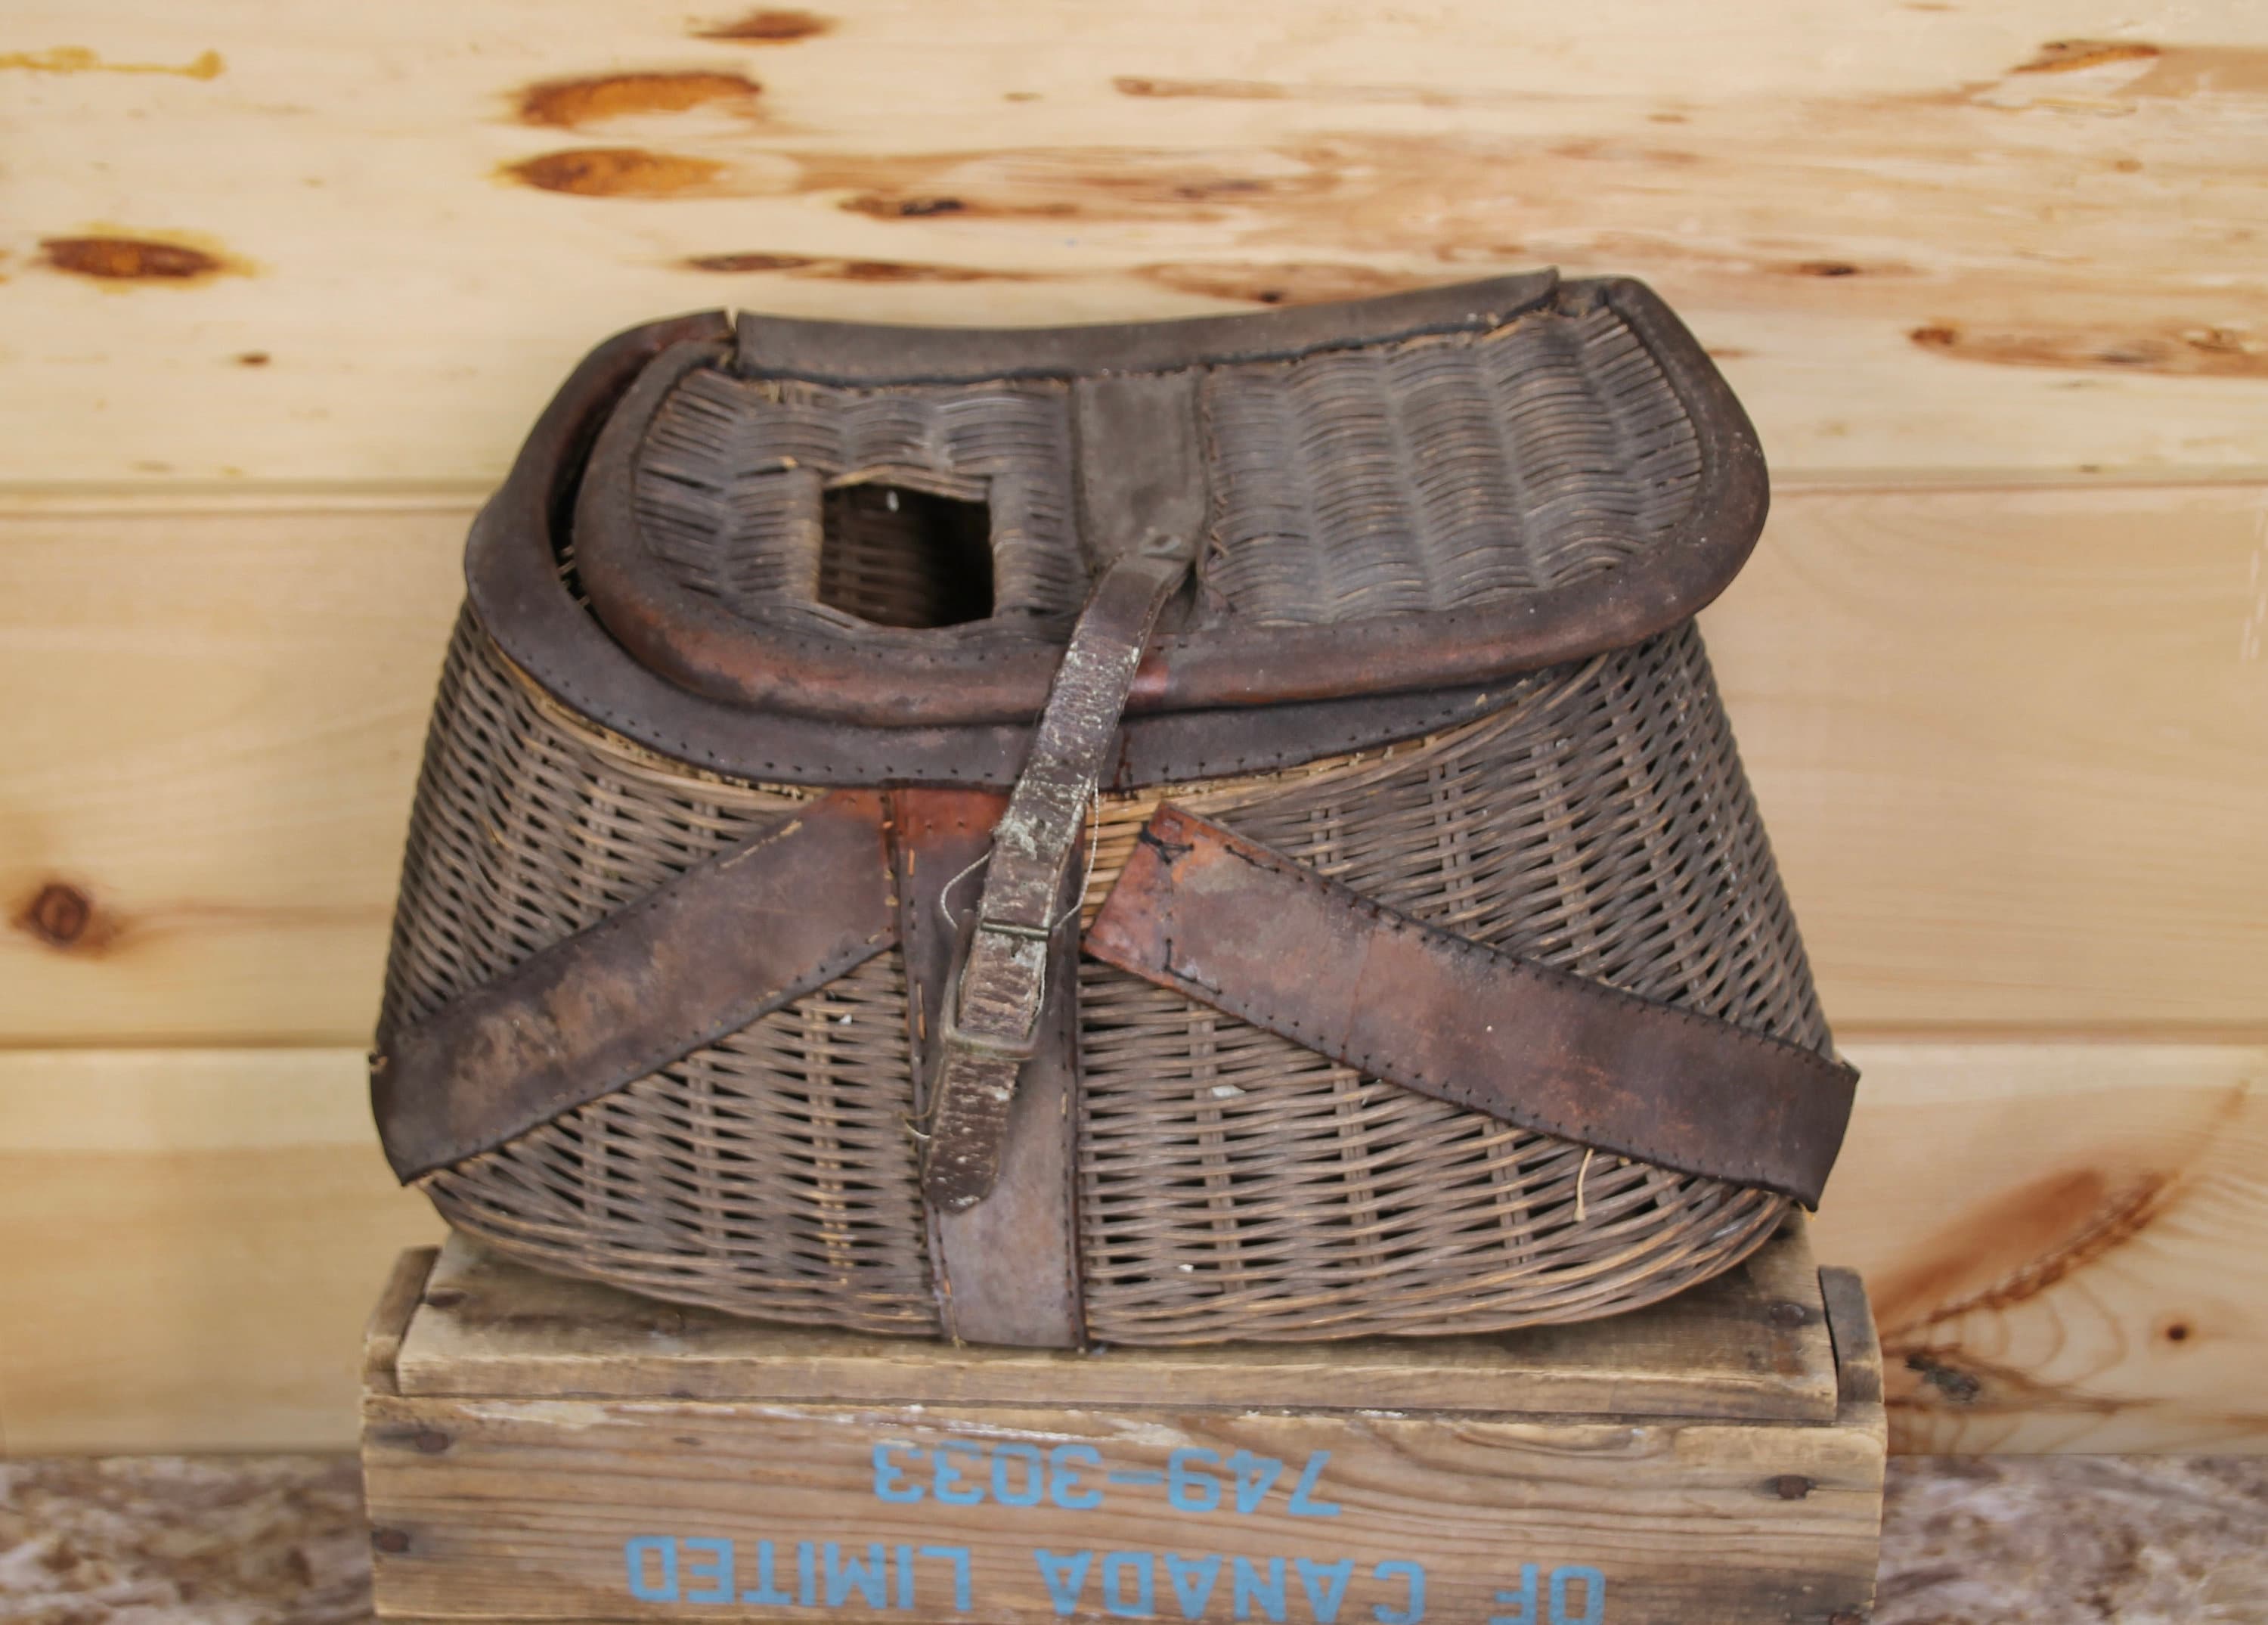 Vintage Wicker Fishing Bait Creel Basket Fly Fishing Retro Fish Decor Hard  to Find 